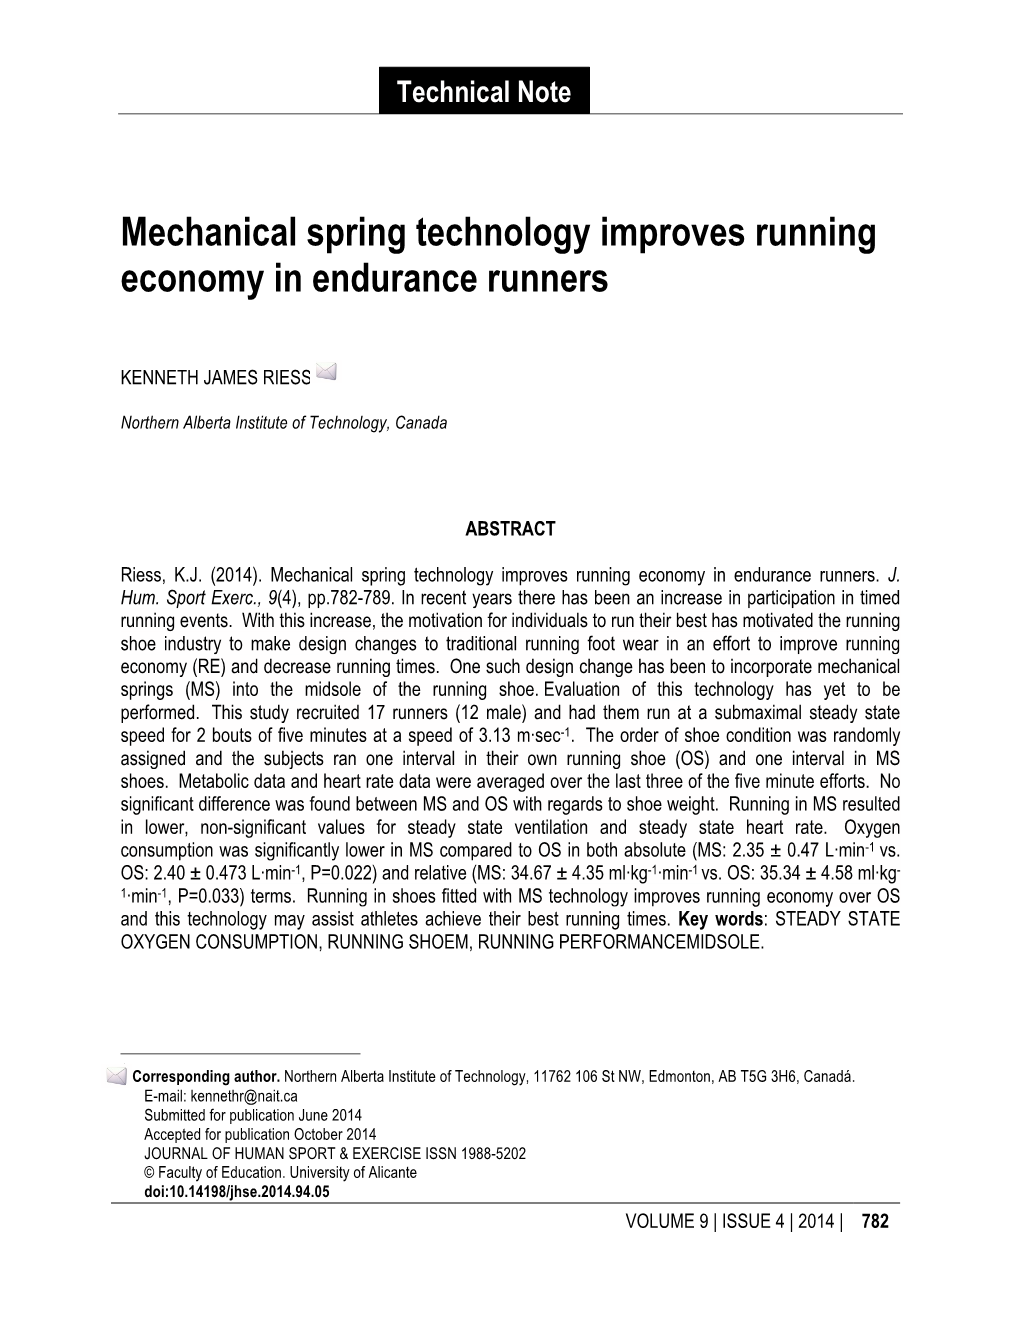 Mechanical Spring Technology Improves Running Economy in Endurance Runners